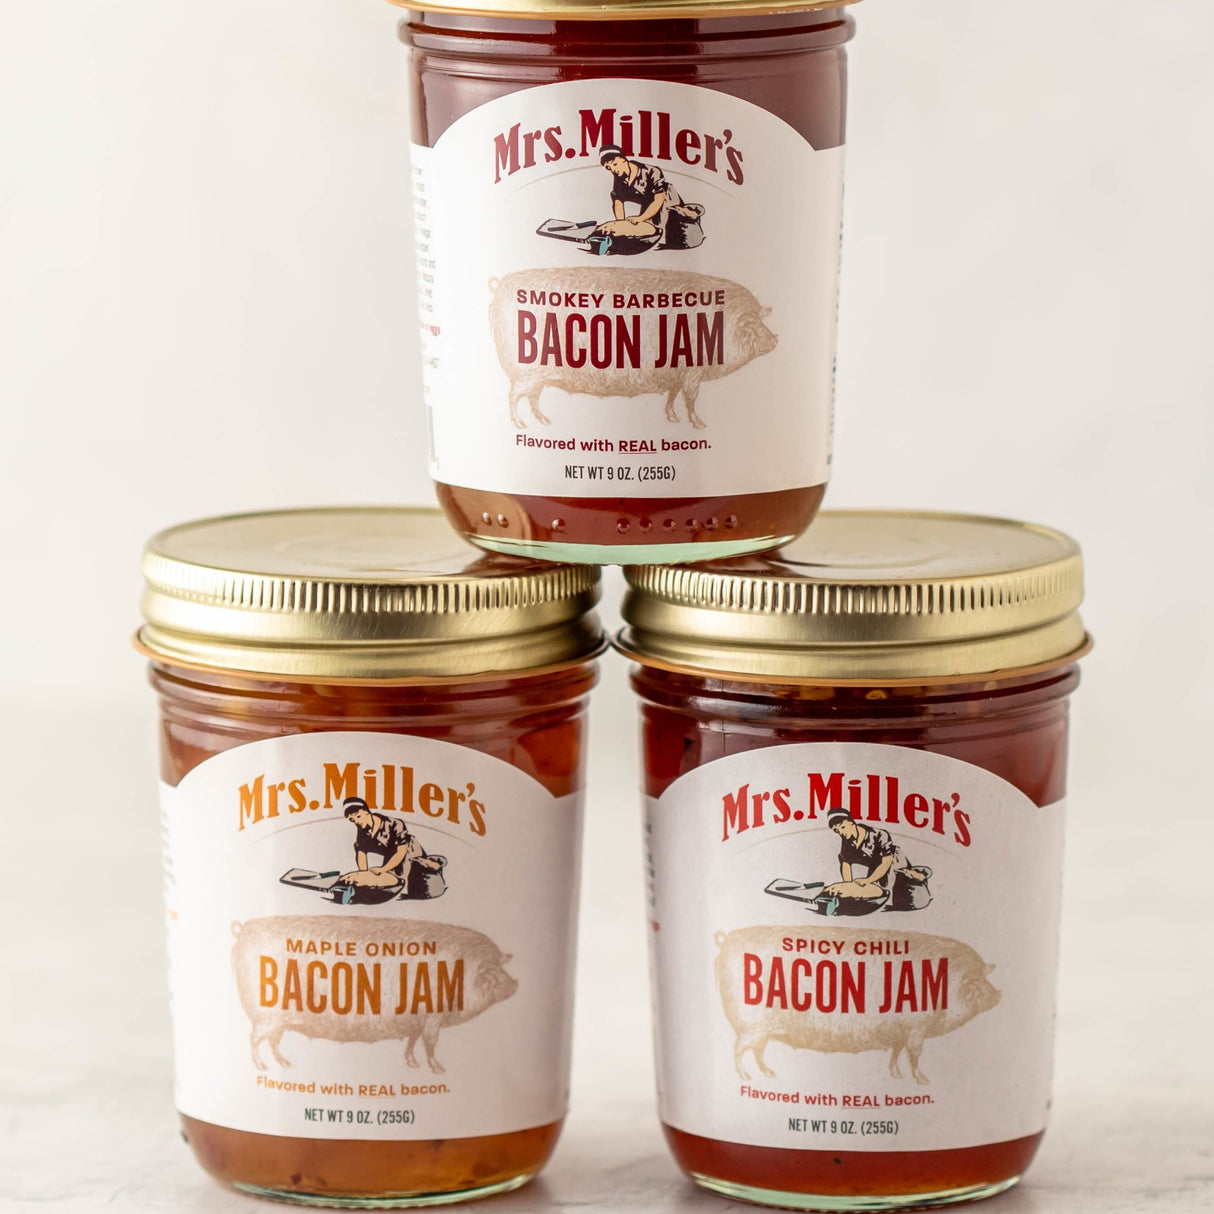 Three flavors of Bacon Jam